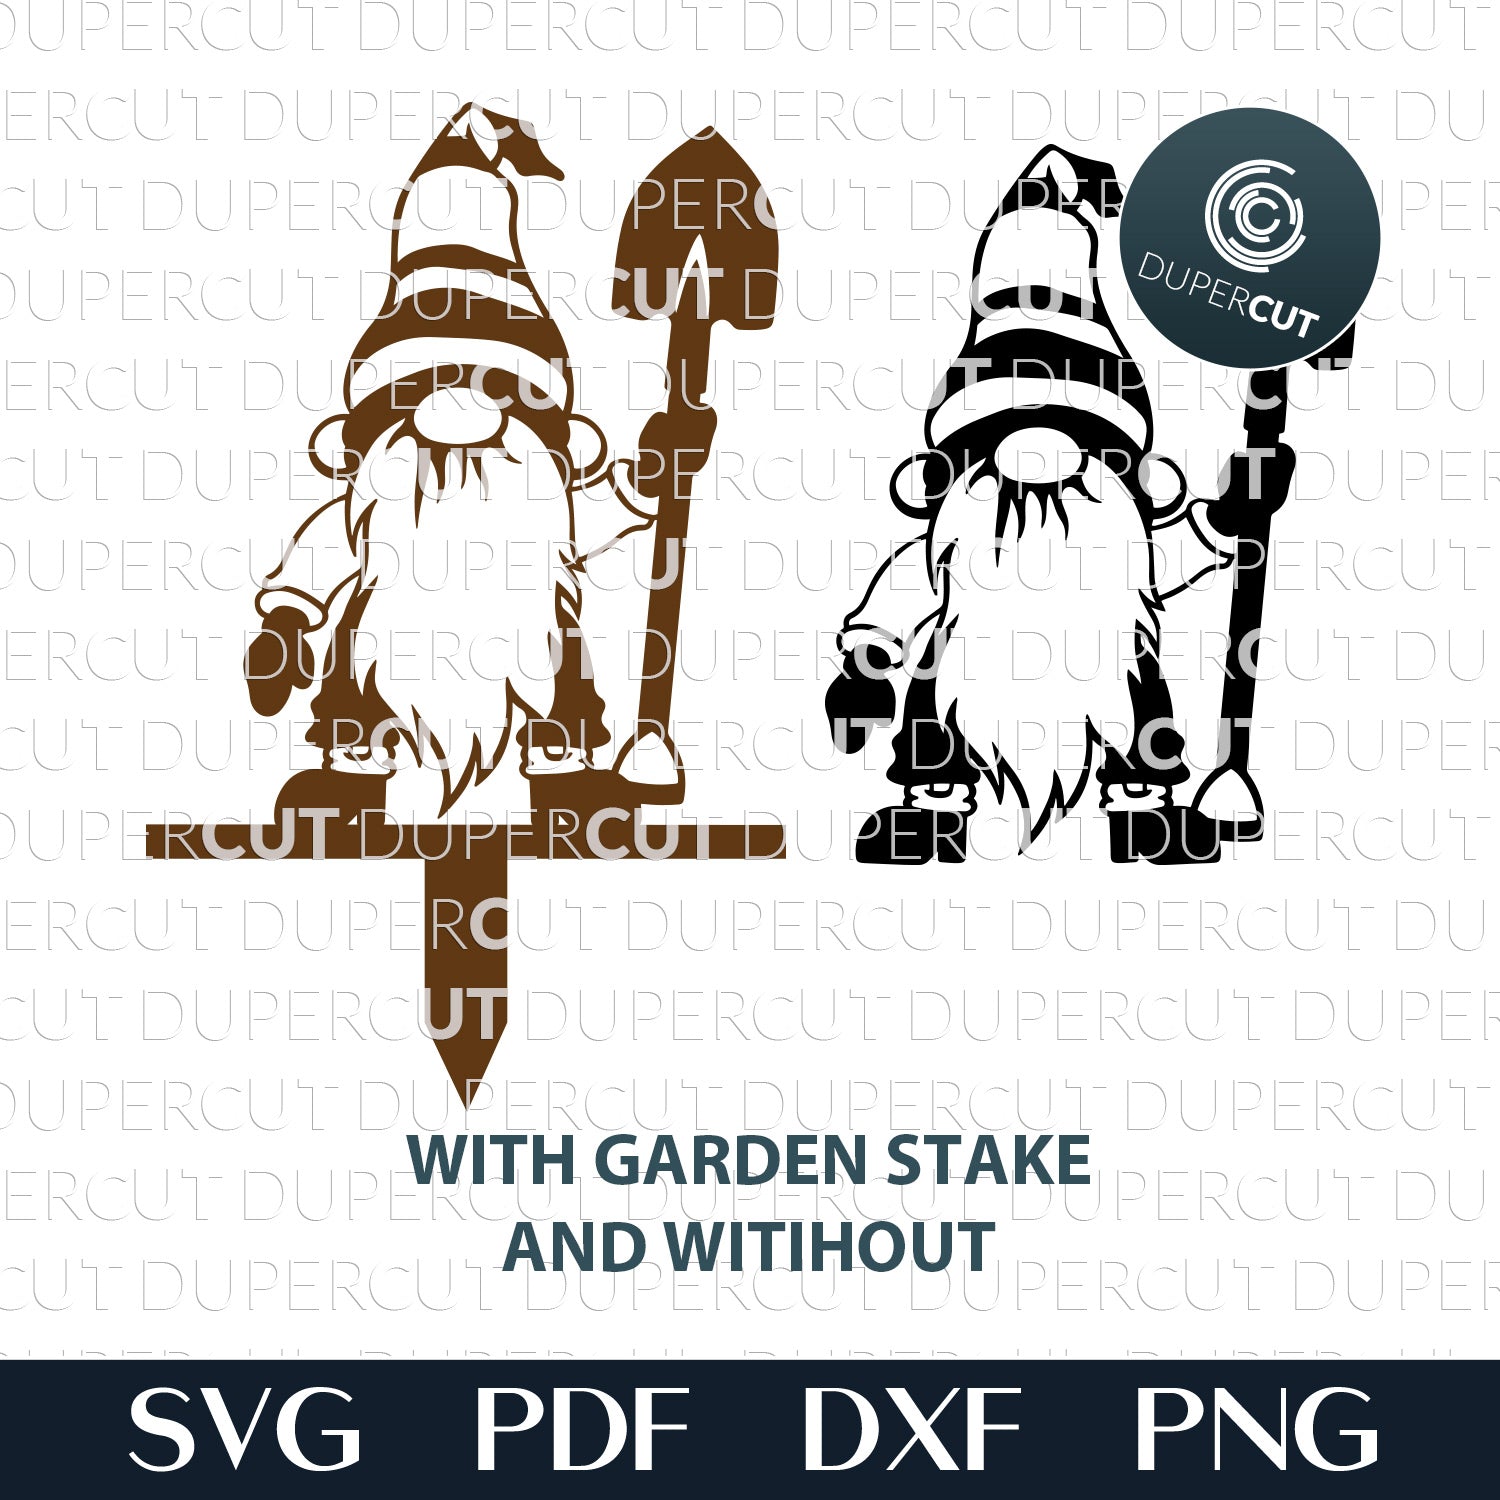 Garden gnome DIY yard decoration - SVG DXF layered cut files for golowforge, cricut, silhouette cameo, cnc plasma machines, scrollsaw pattern by www.DuperCut.com